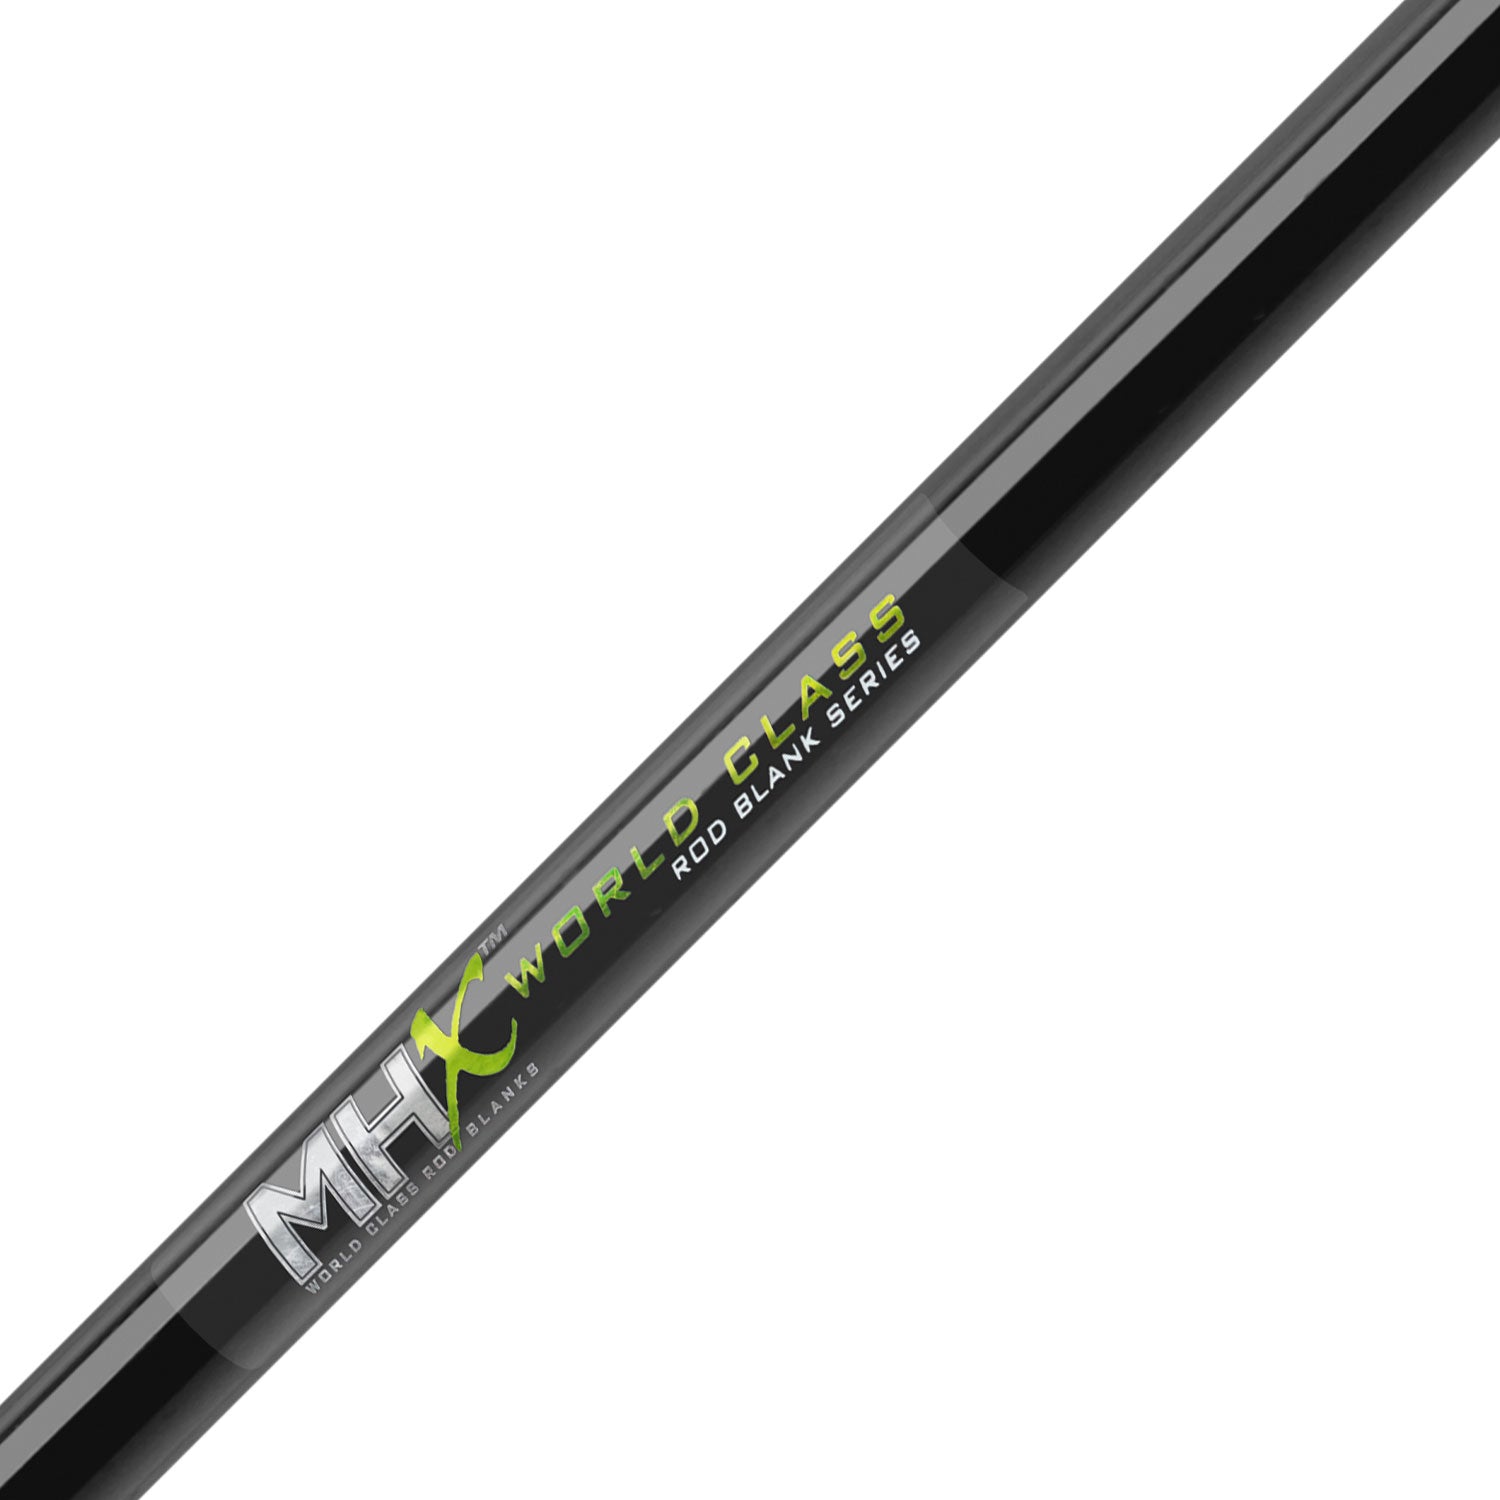 MHX 9'0" Medium Surf Rod Blank - SU1087F-MHX